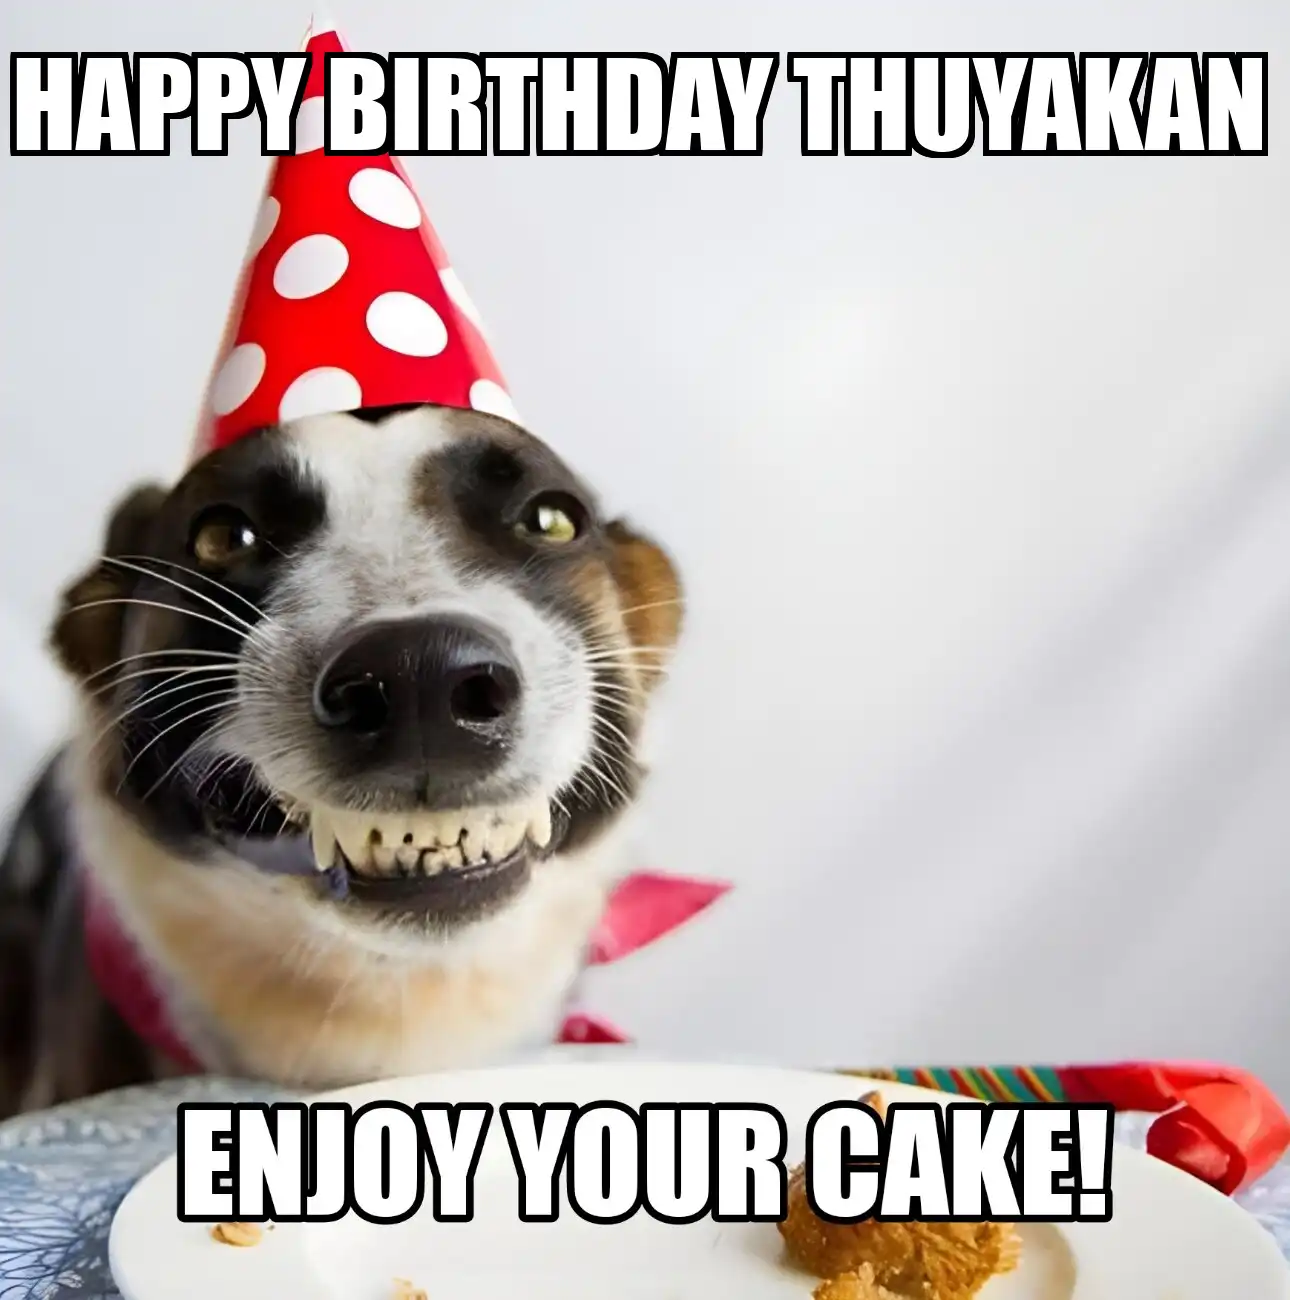 Happy Birthday Thuyakan Enjoy Your Cake Dog Meme